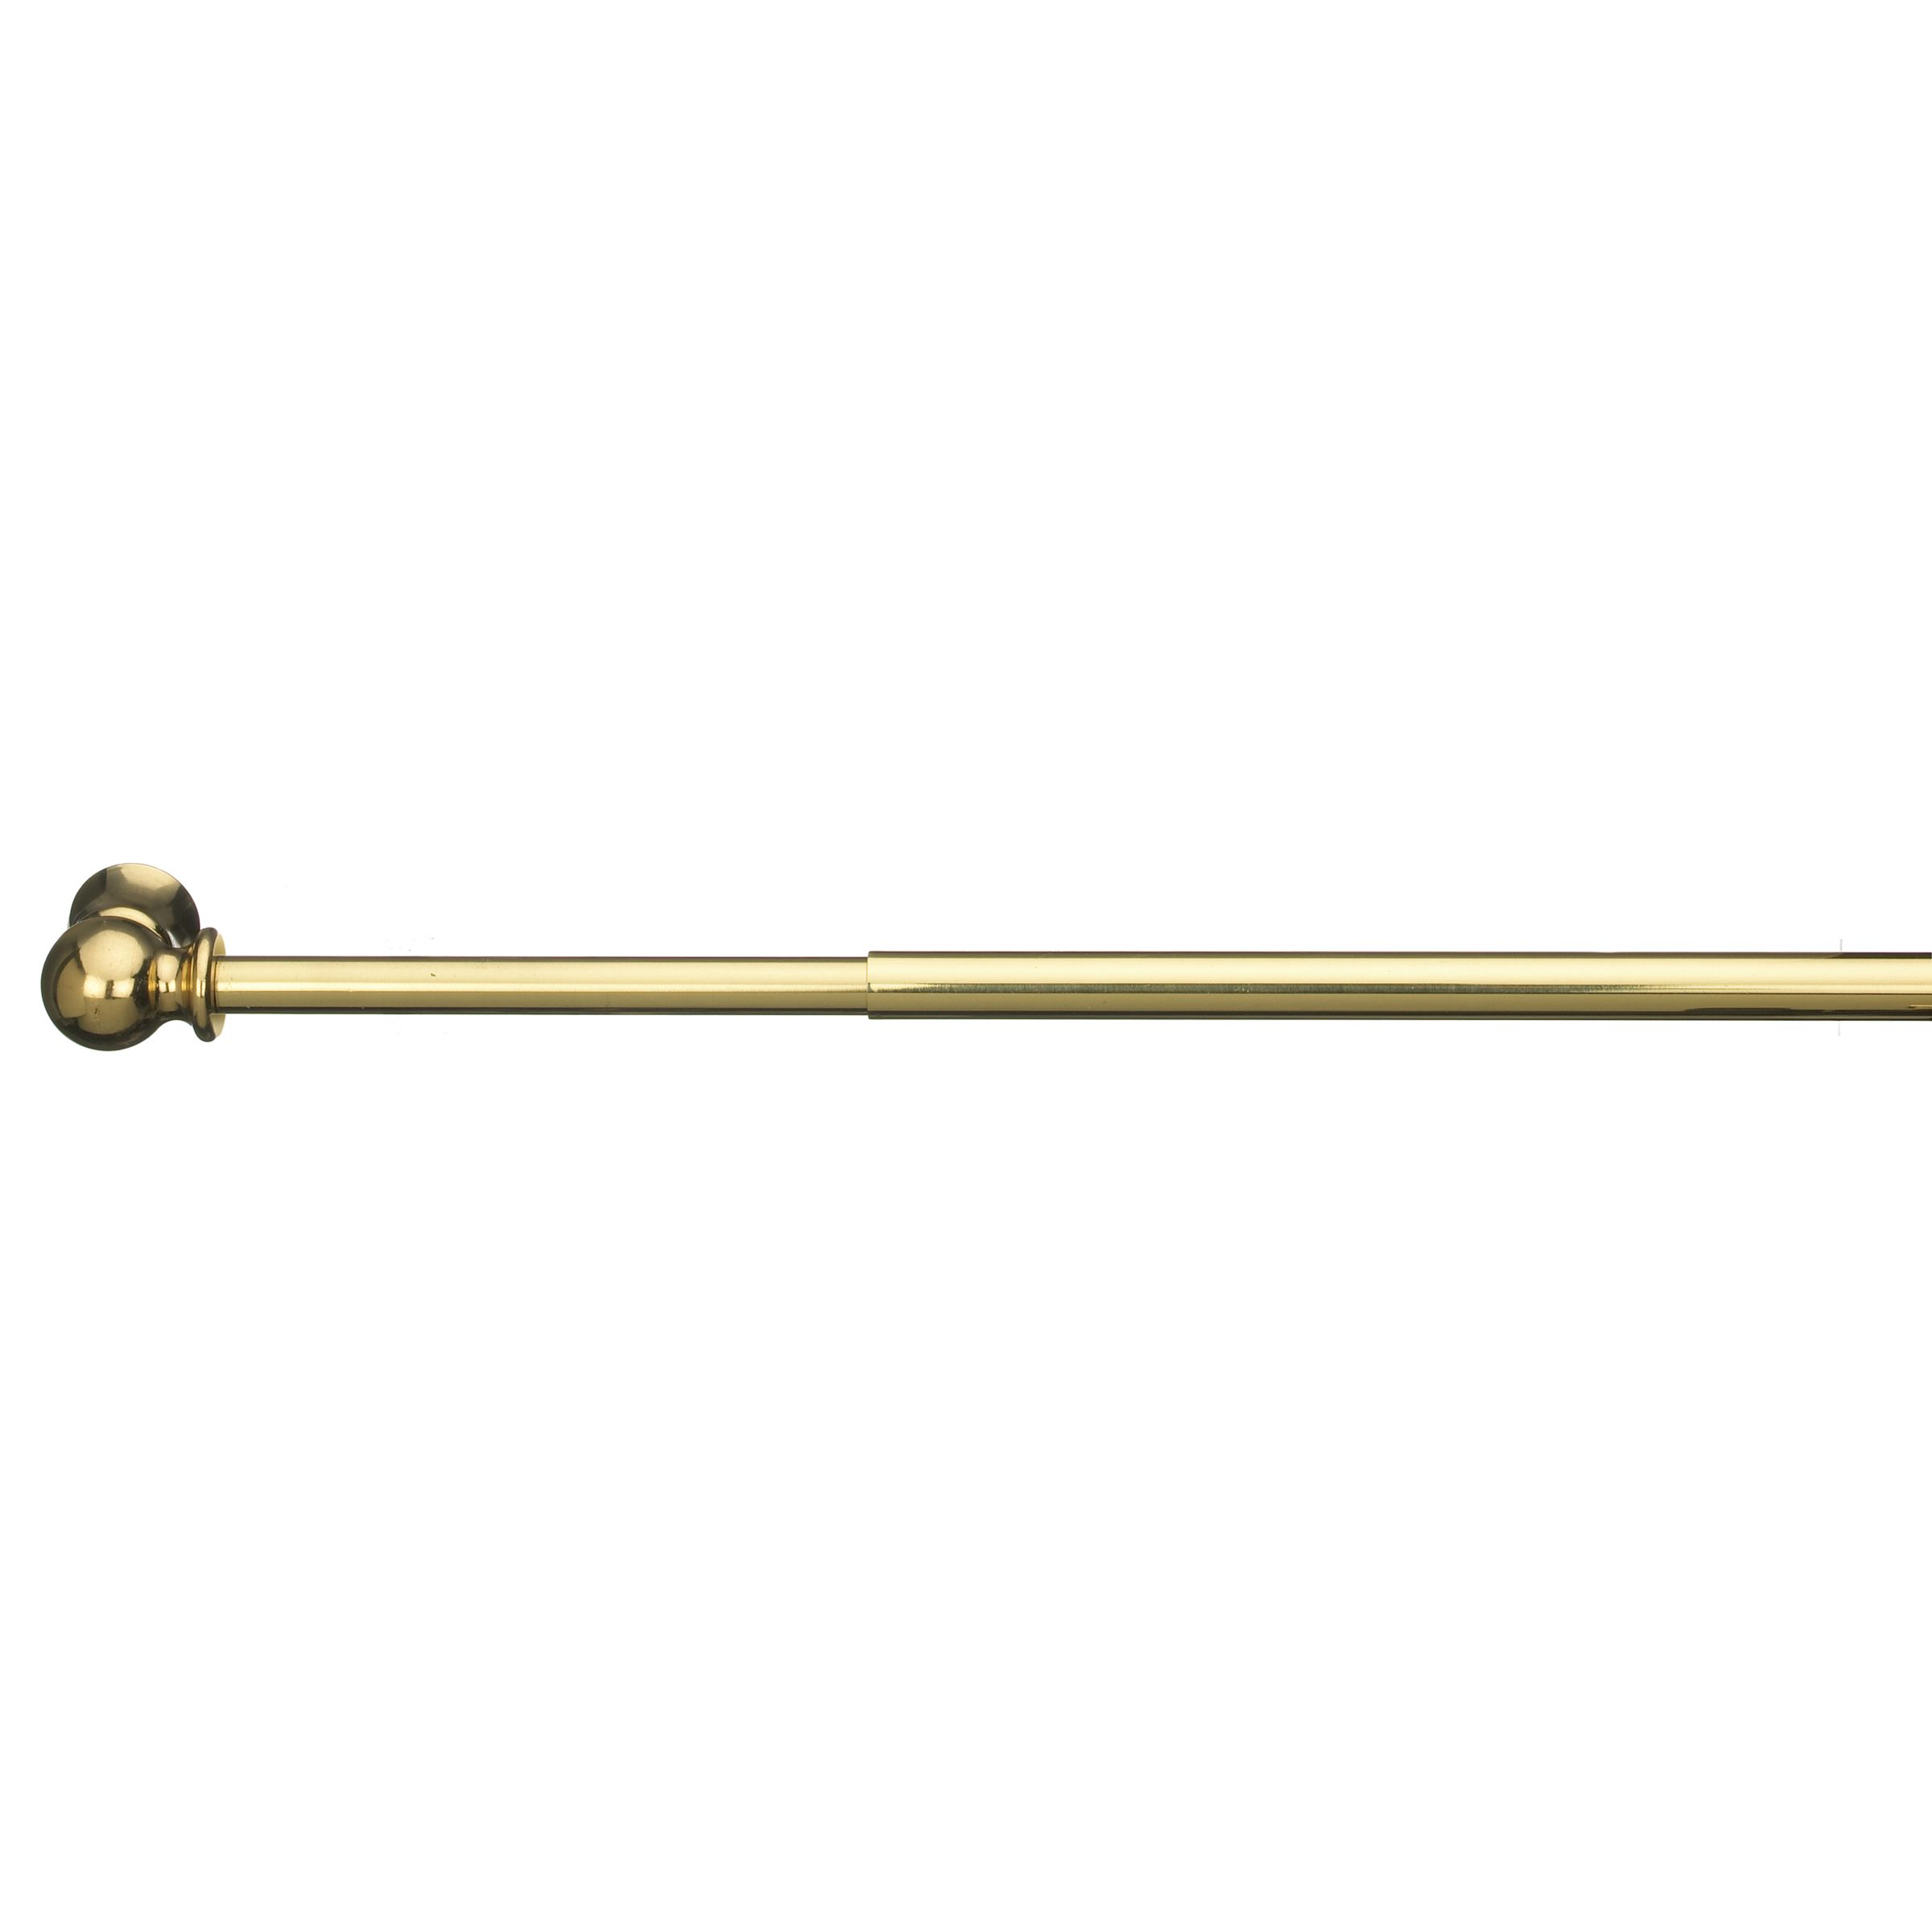 Unbranded Cafe Rod- Antique Brass- W102-178cm